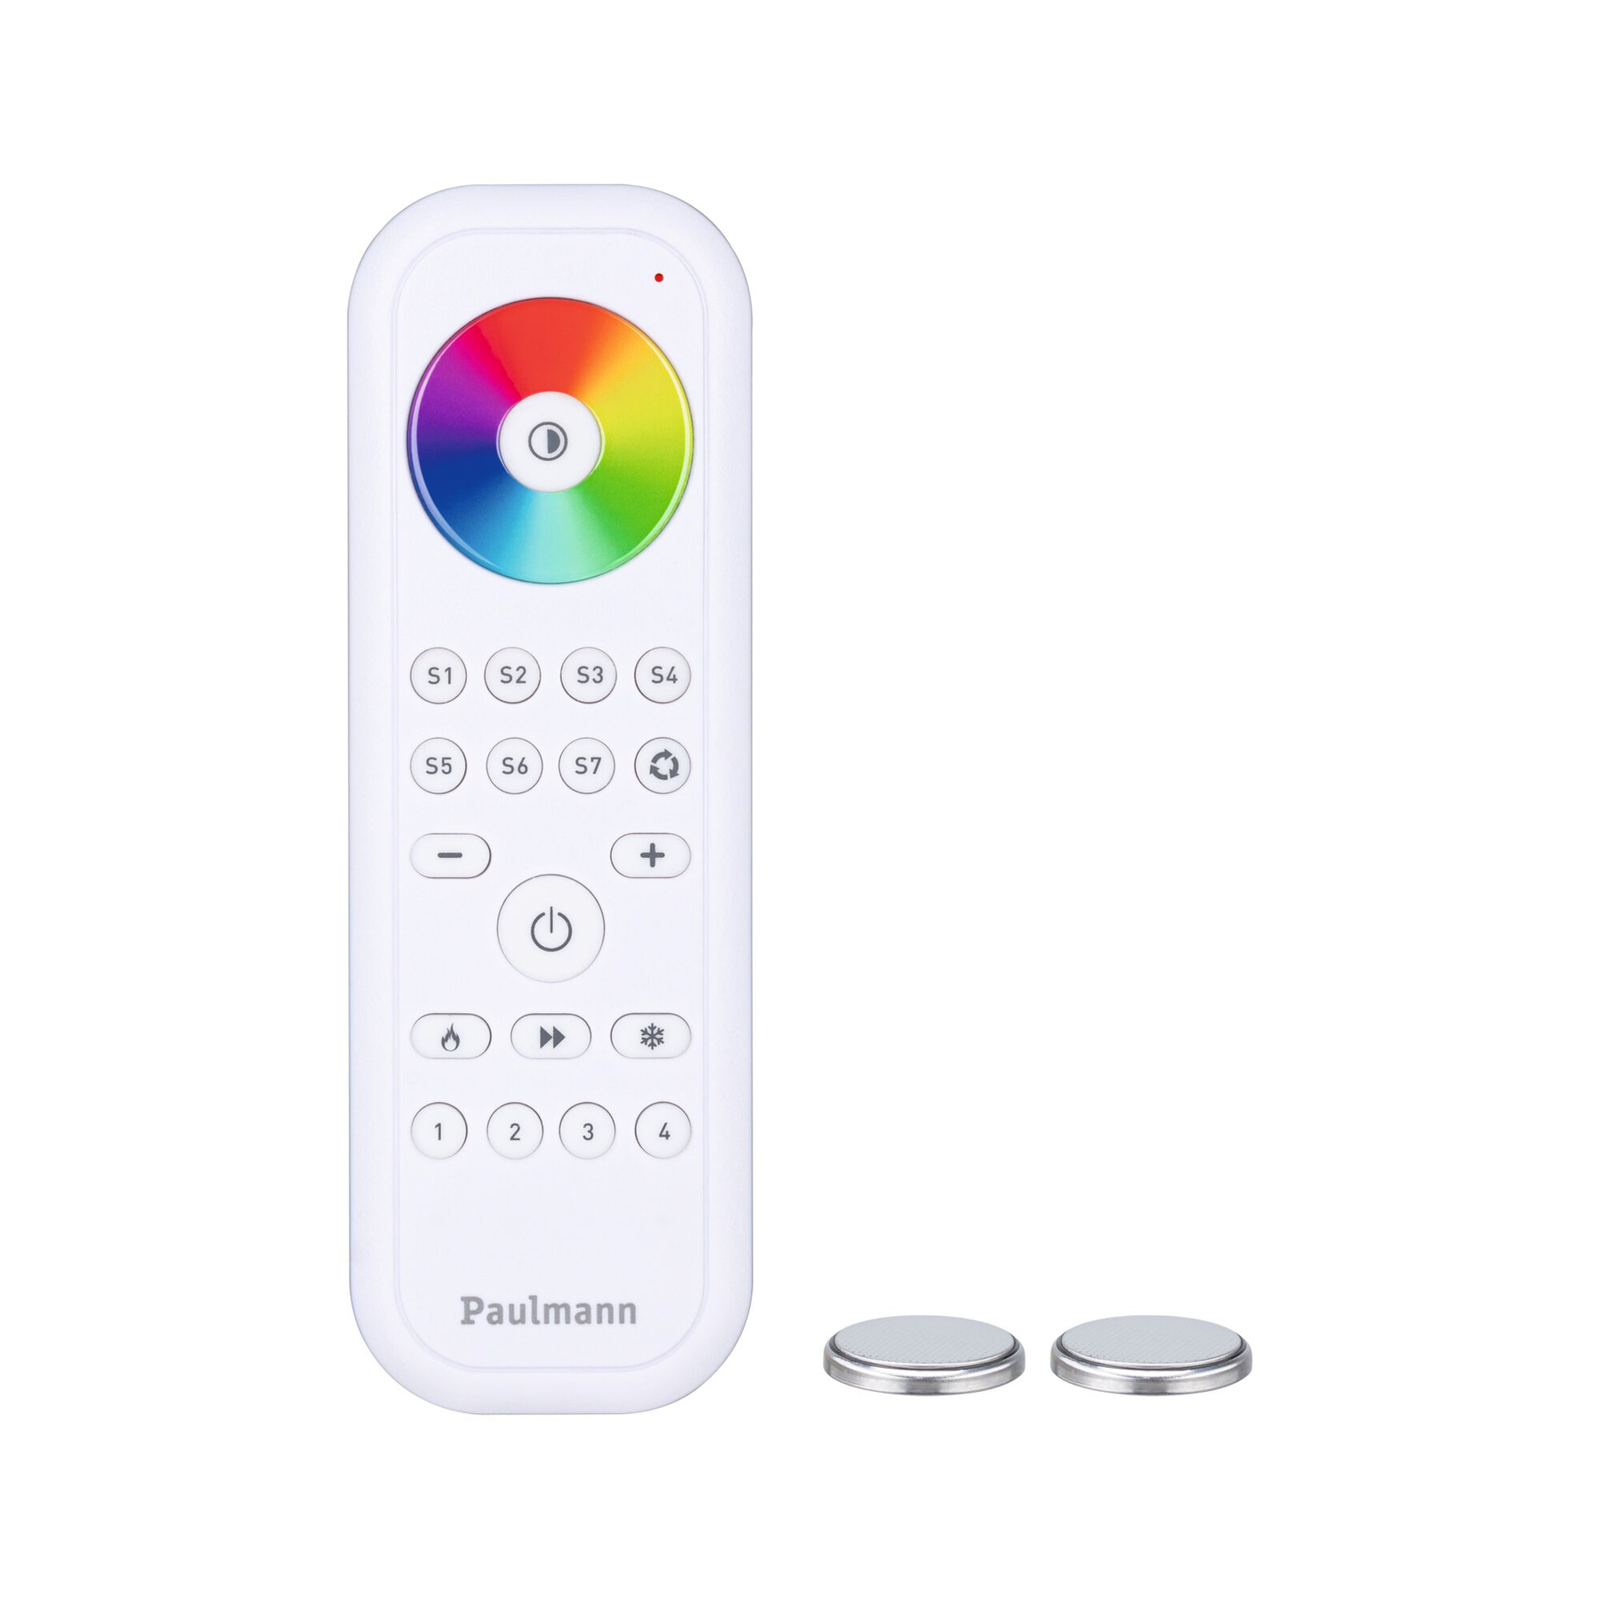 Paulmann Ghent 2 remote control, ZigBee 3.0, white